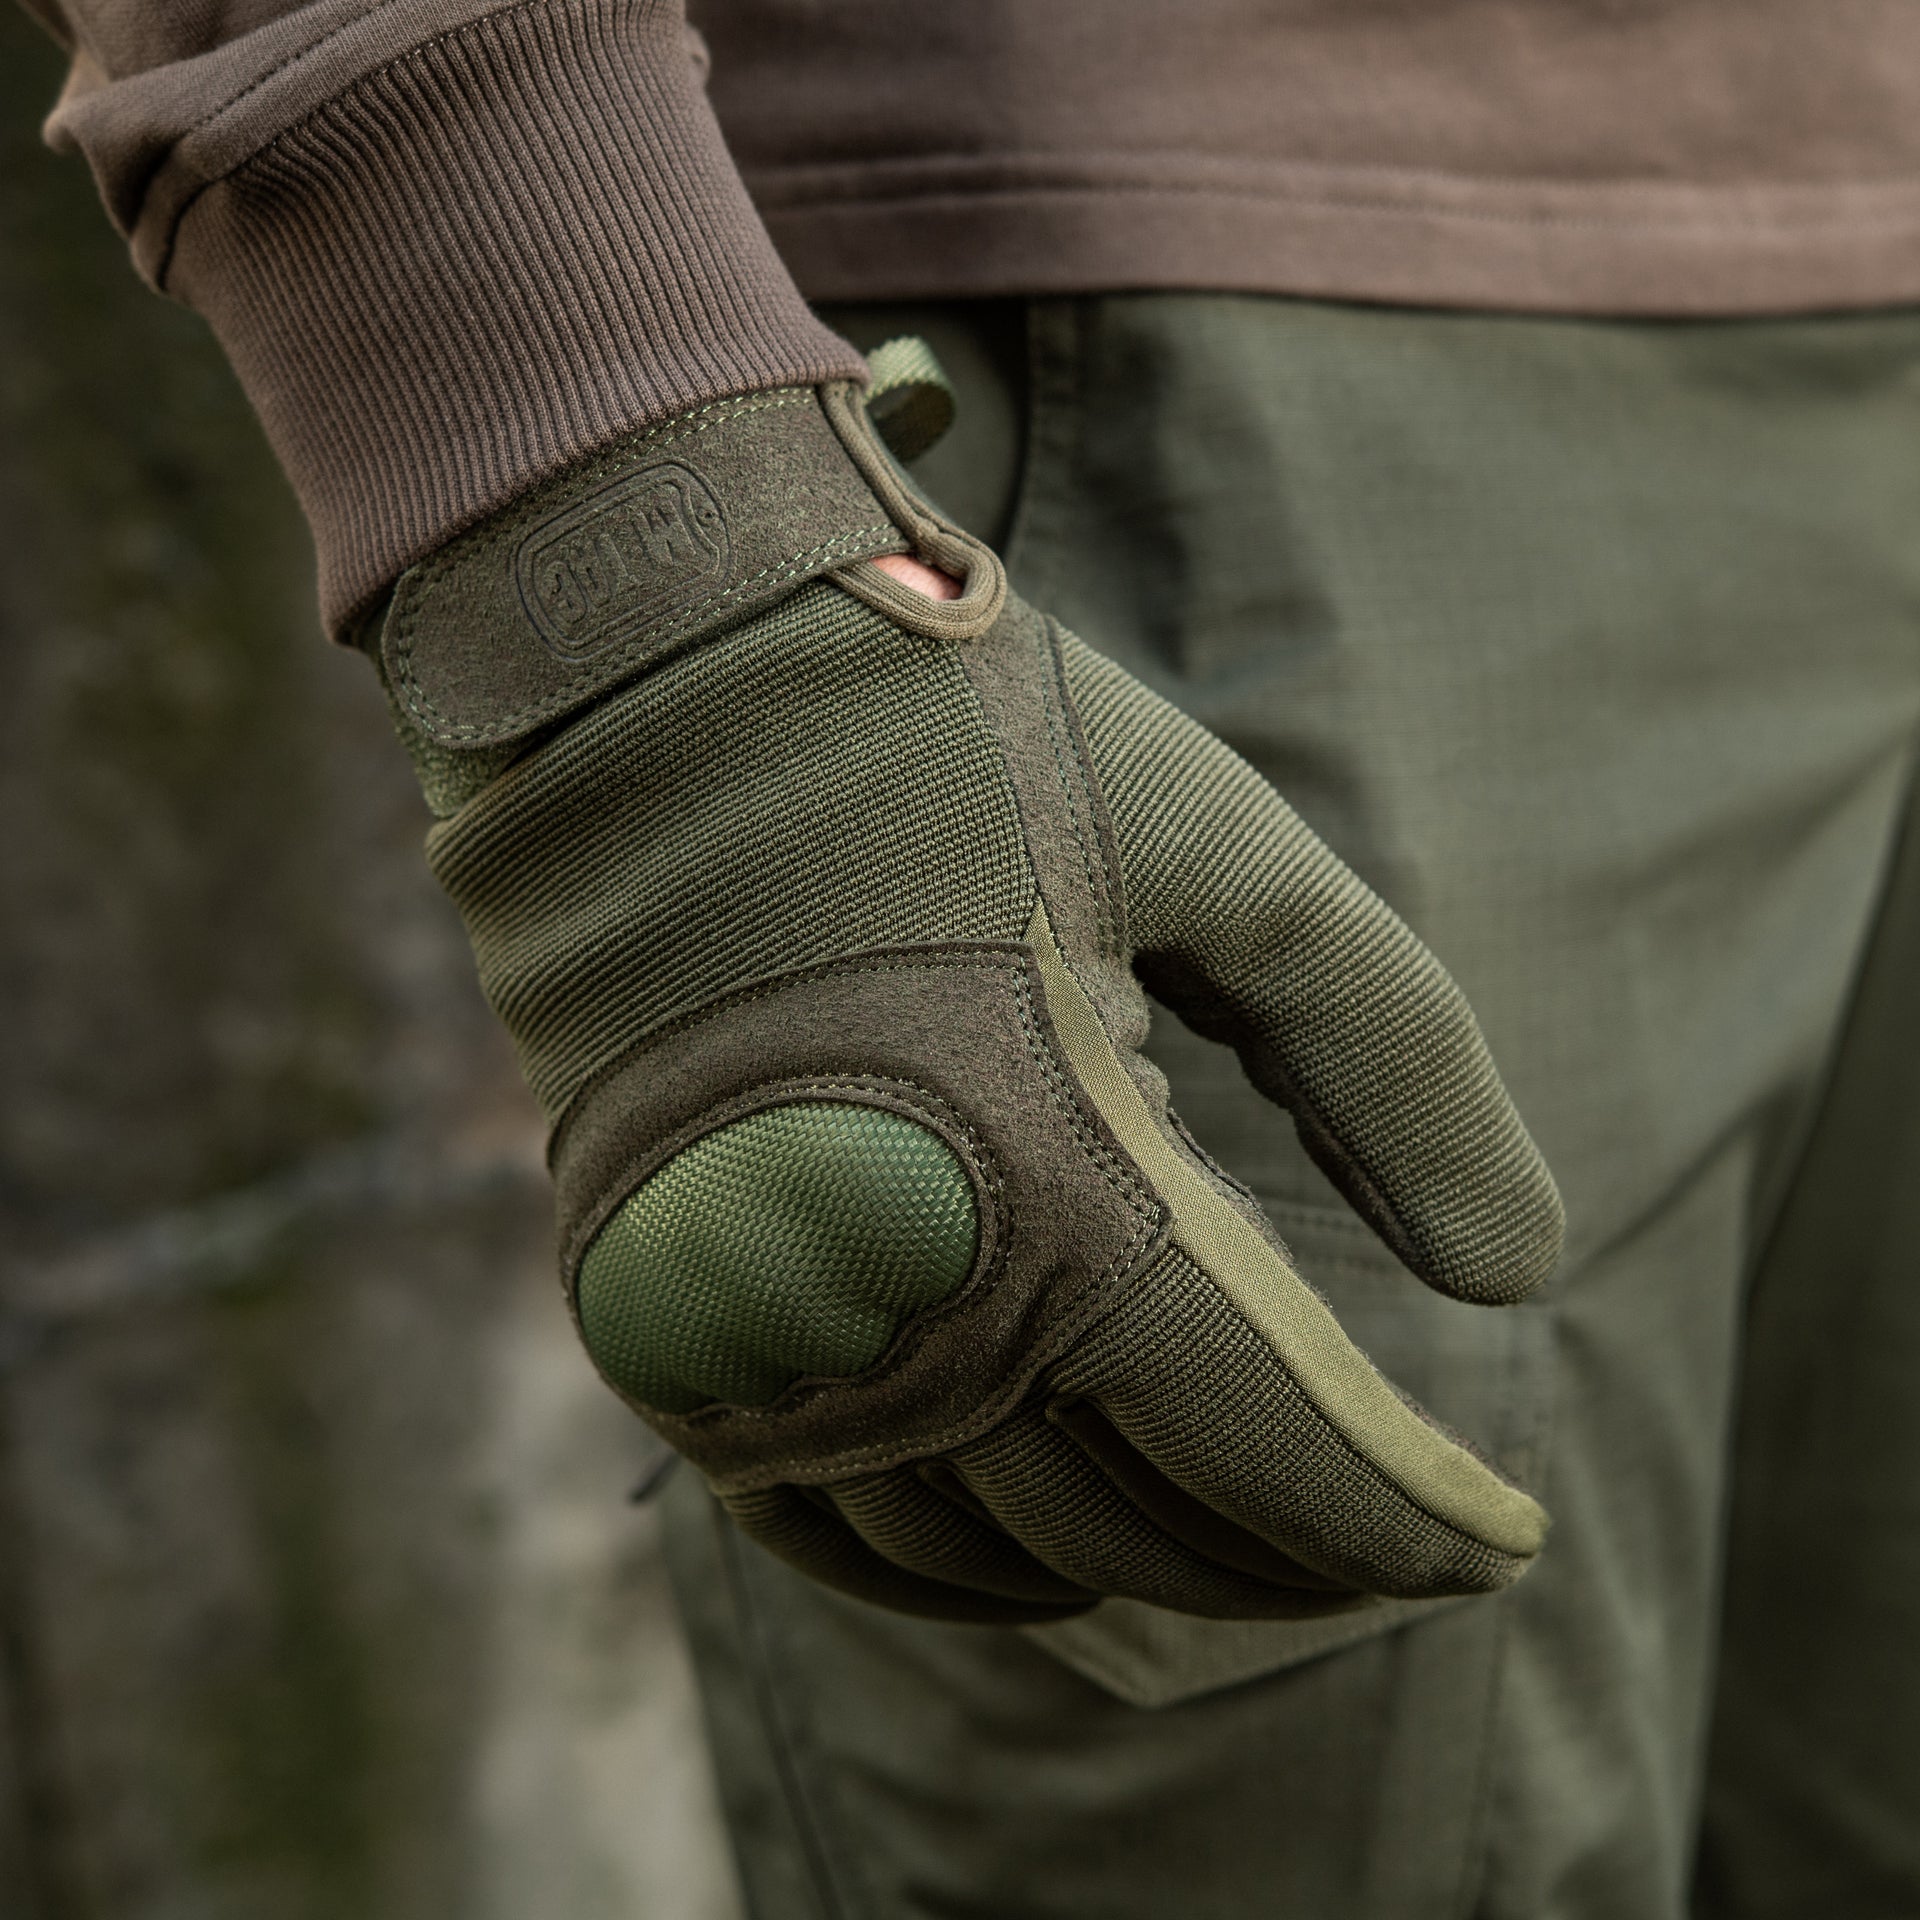 M-Tac Gloves Assault Tactical Mk.3